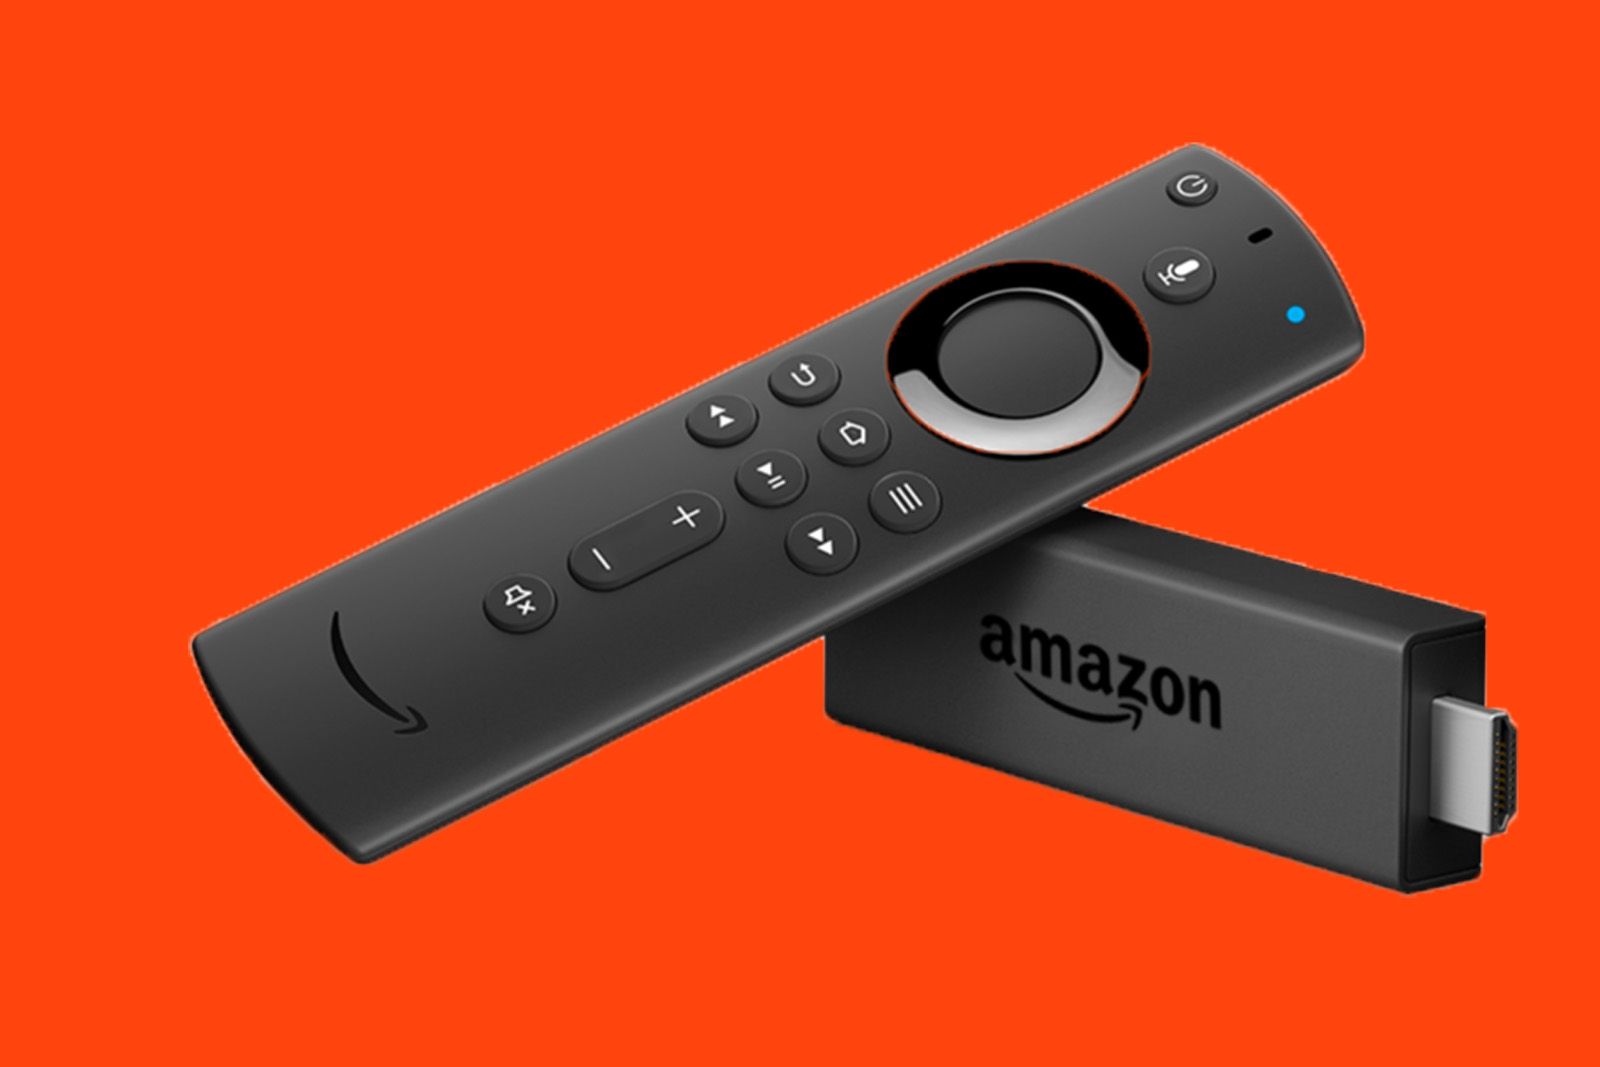 Amazon brings its new Alexa voice remote to the original Fire TV Stick image 1